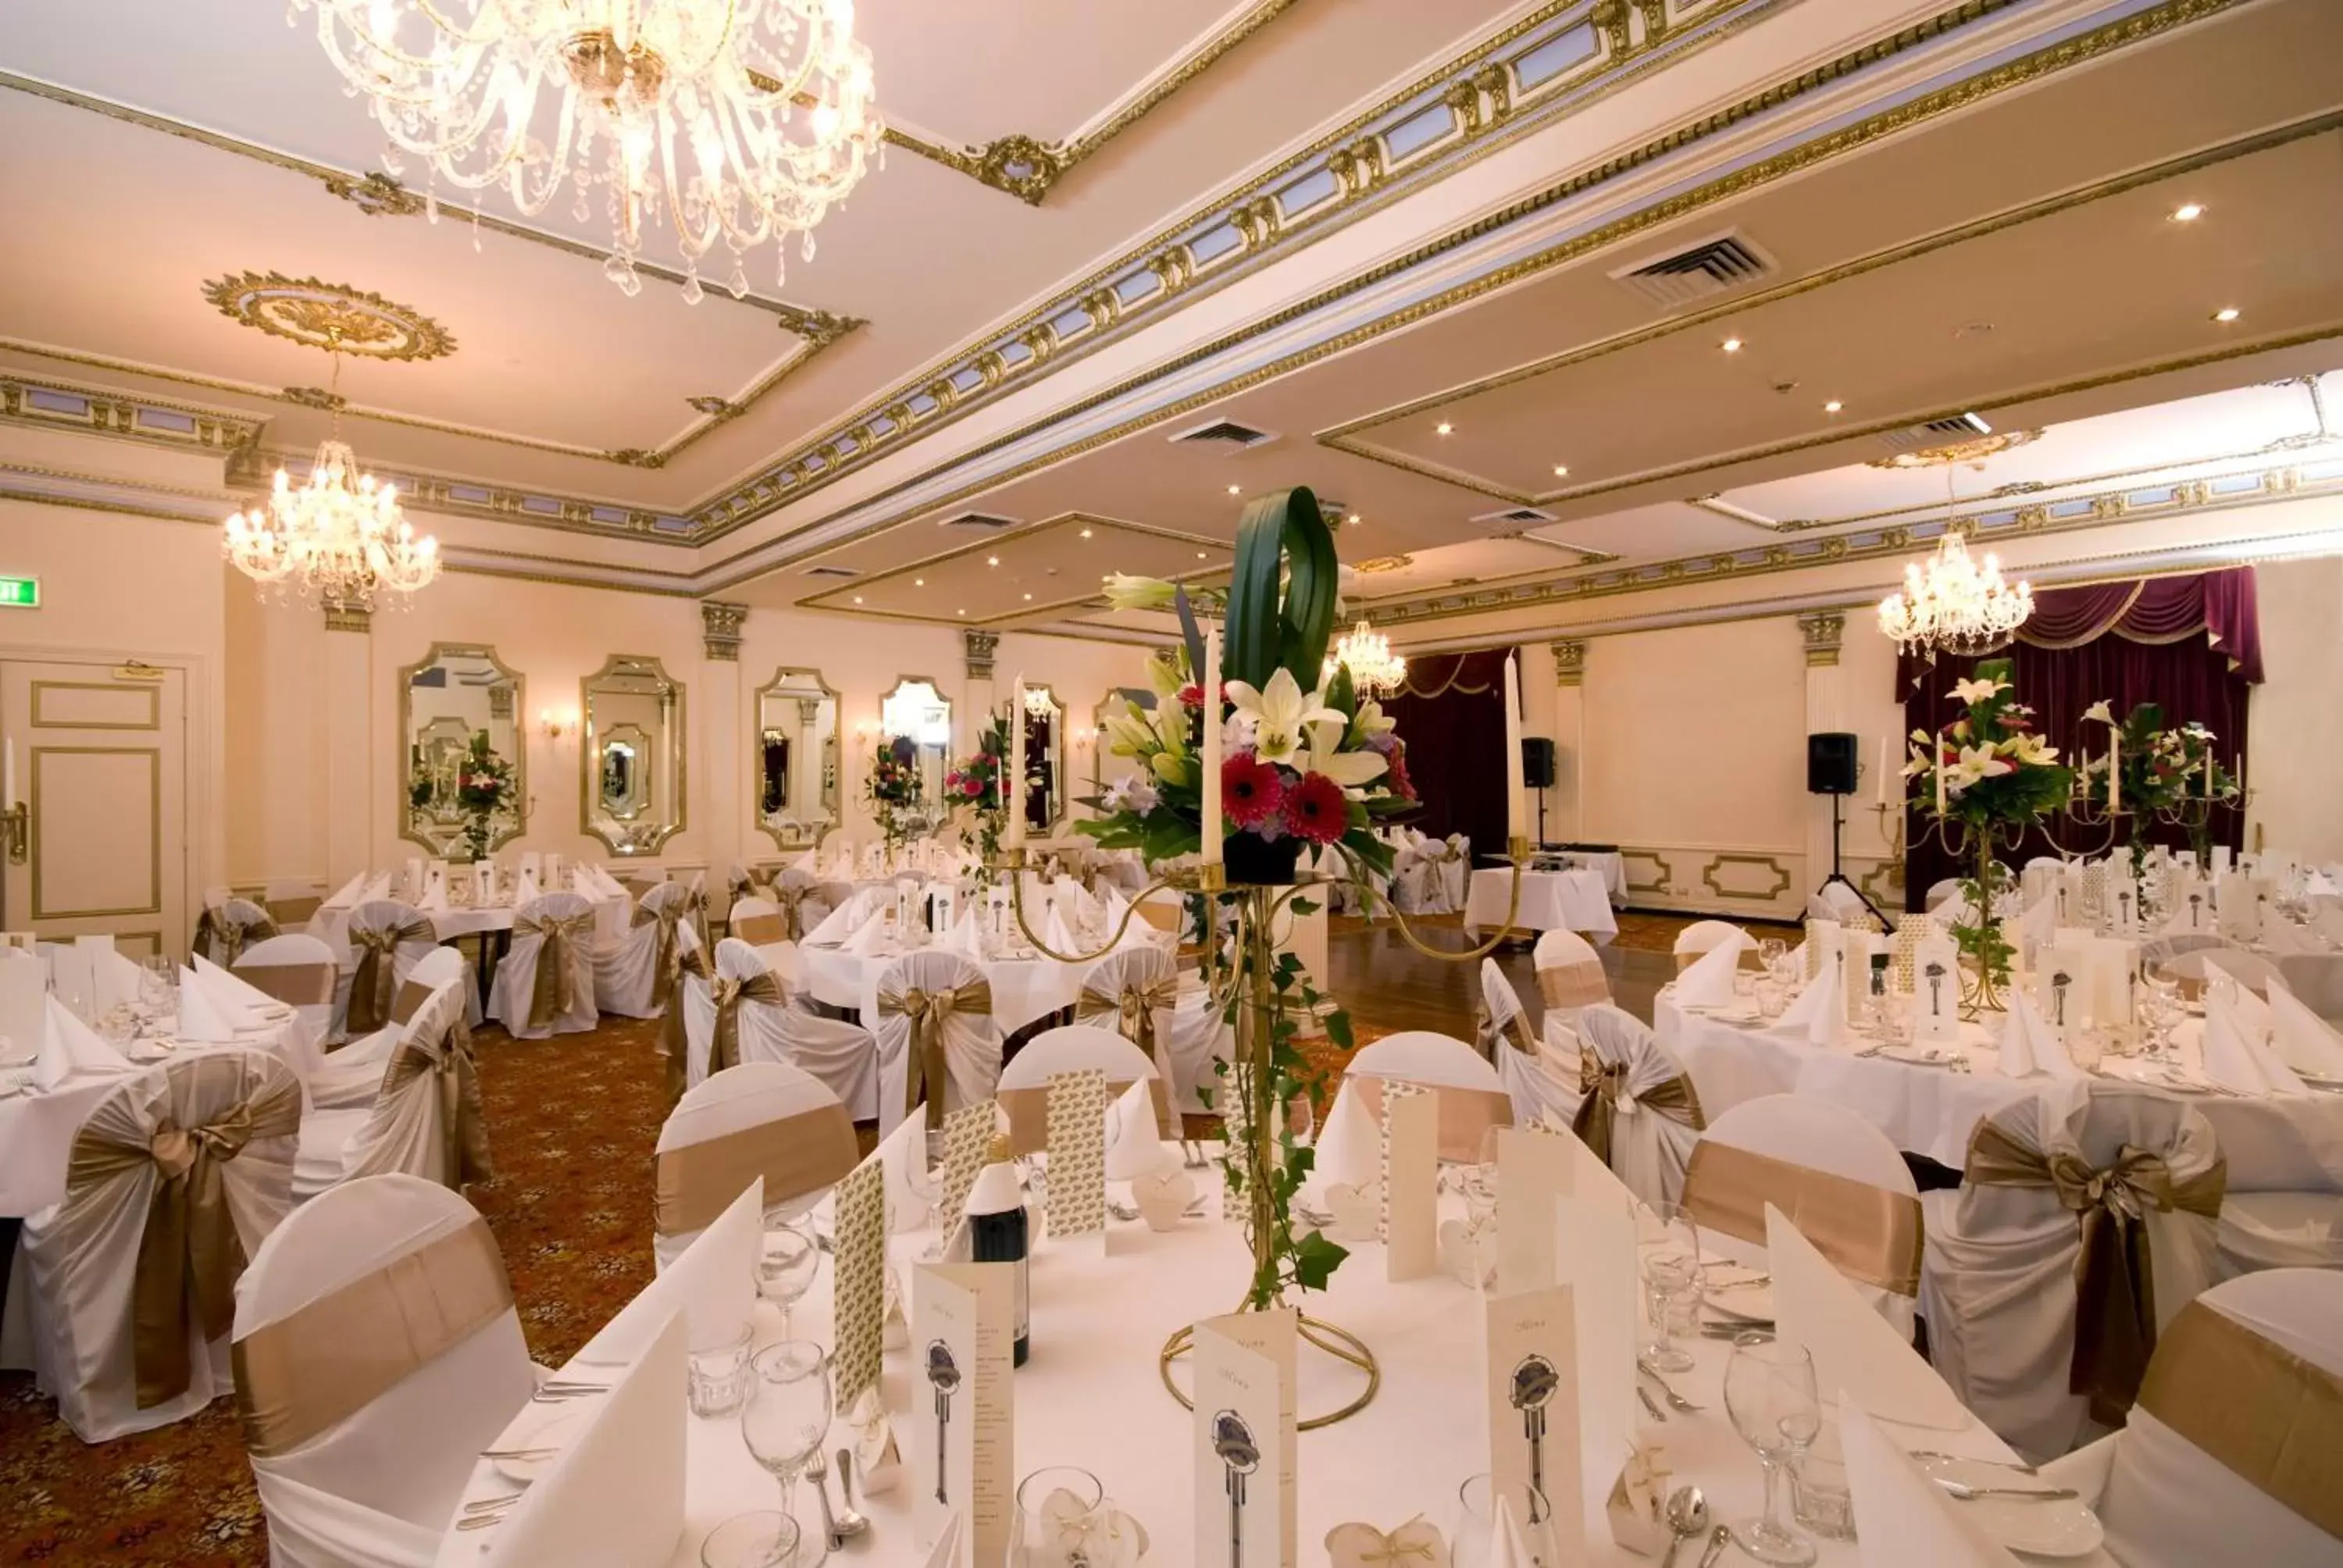 Banquet/Function facilities, Banquet Facilities in Palais Royale